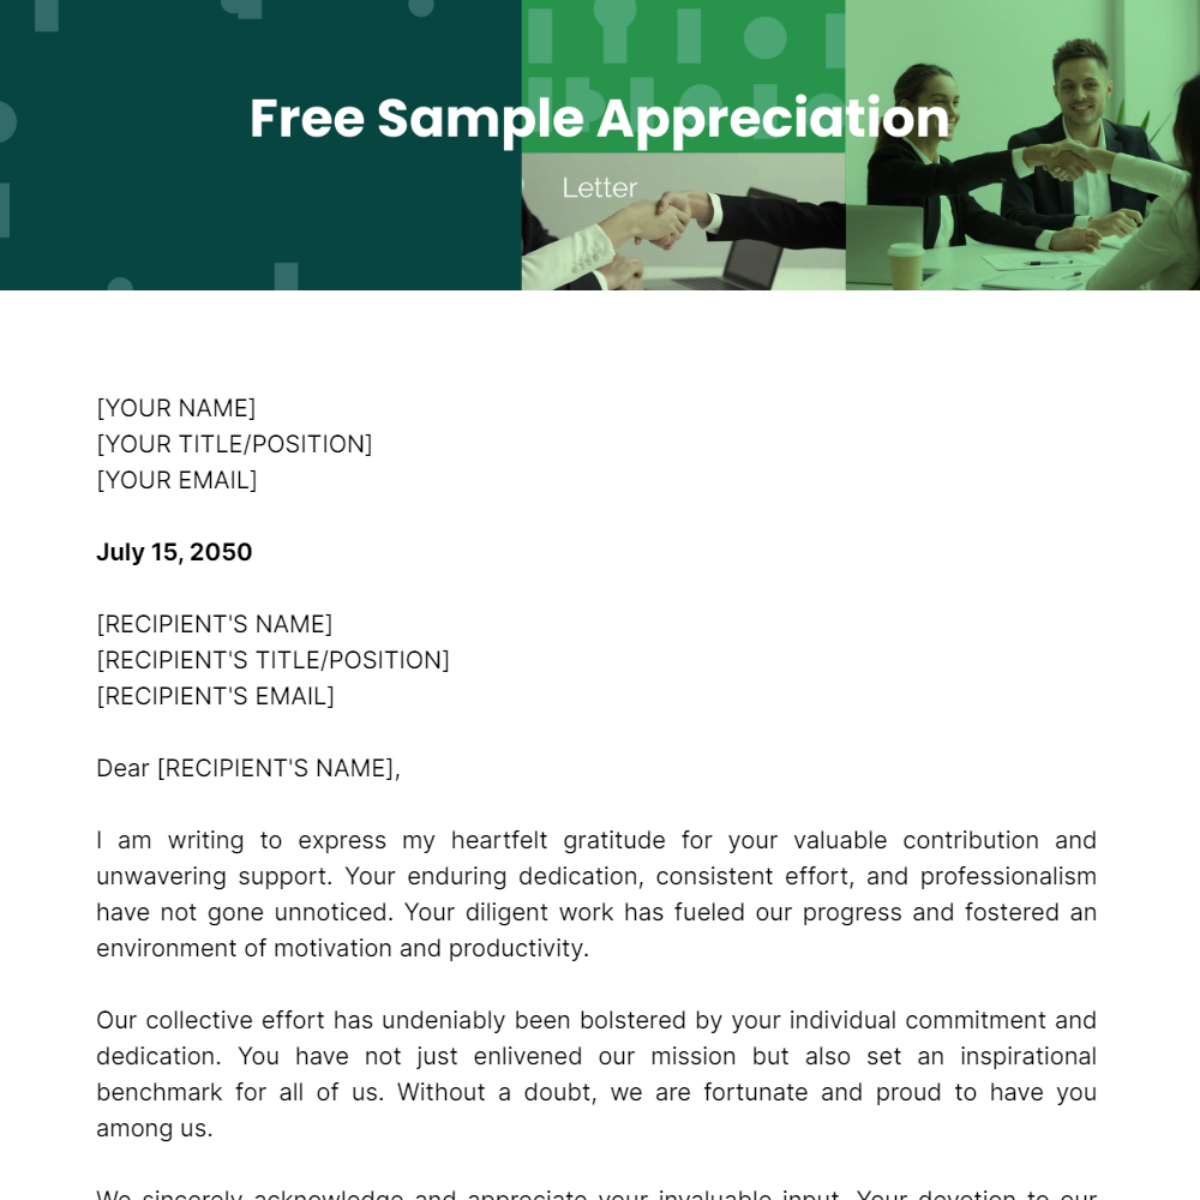 Sample Appreciation Letter Template